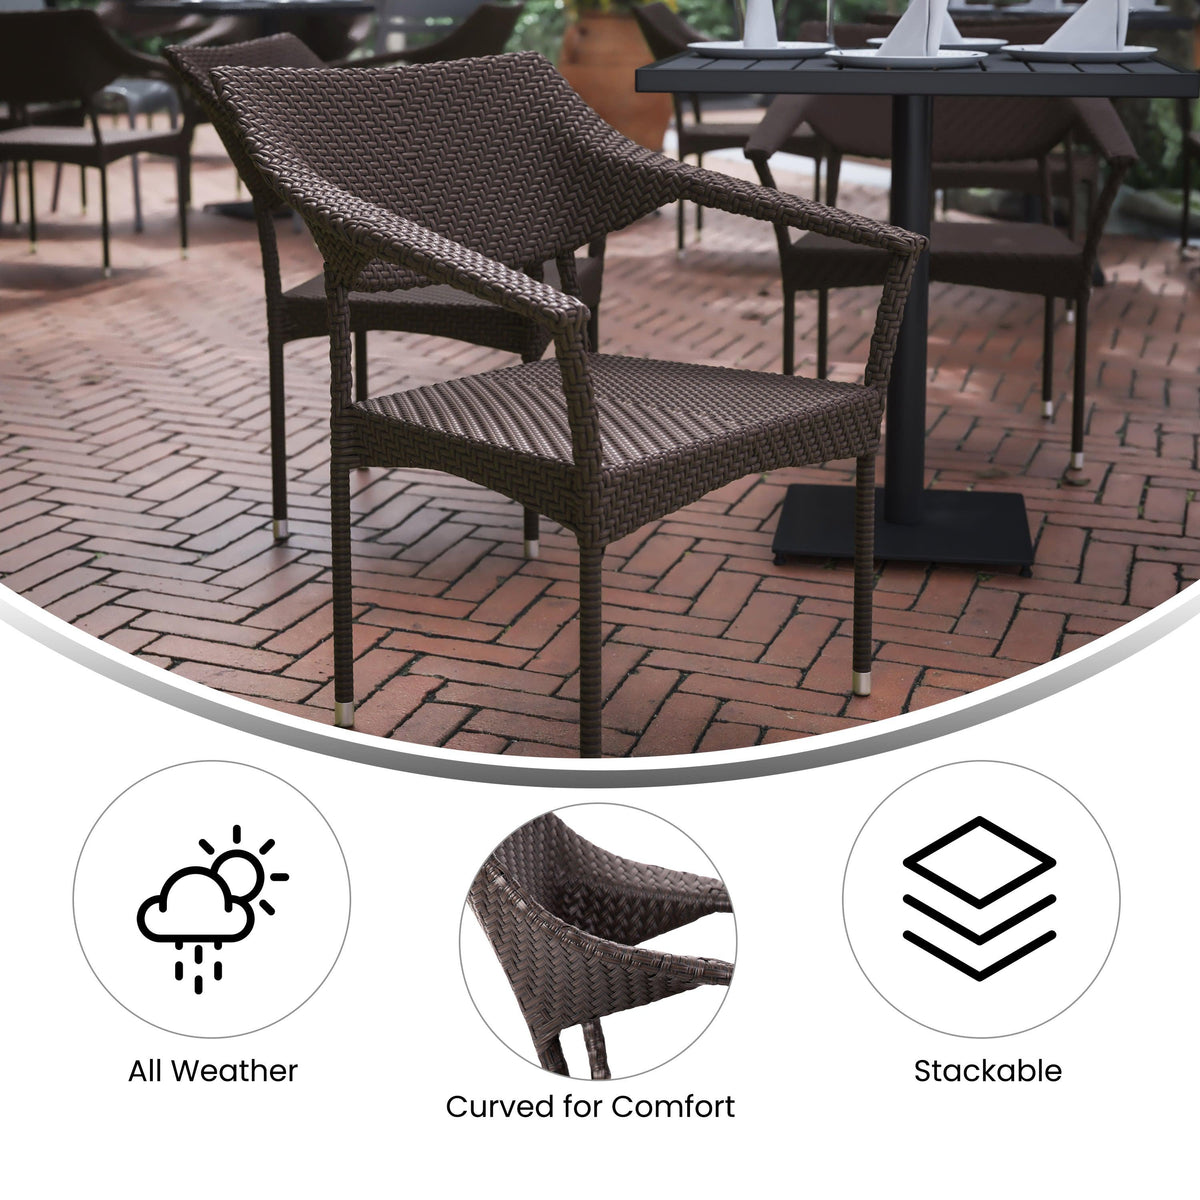 Espresso |#| All Weather Commercial Grade PE Rattan Stacking Patio Chairs in Espresso